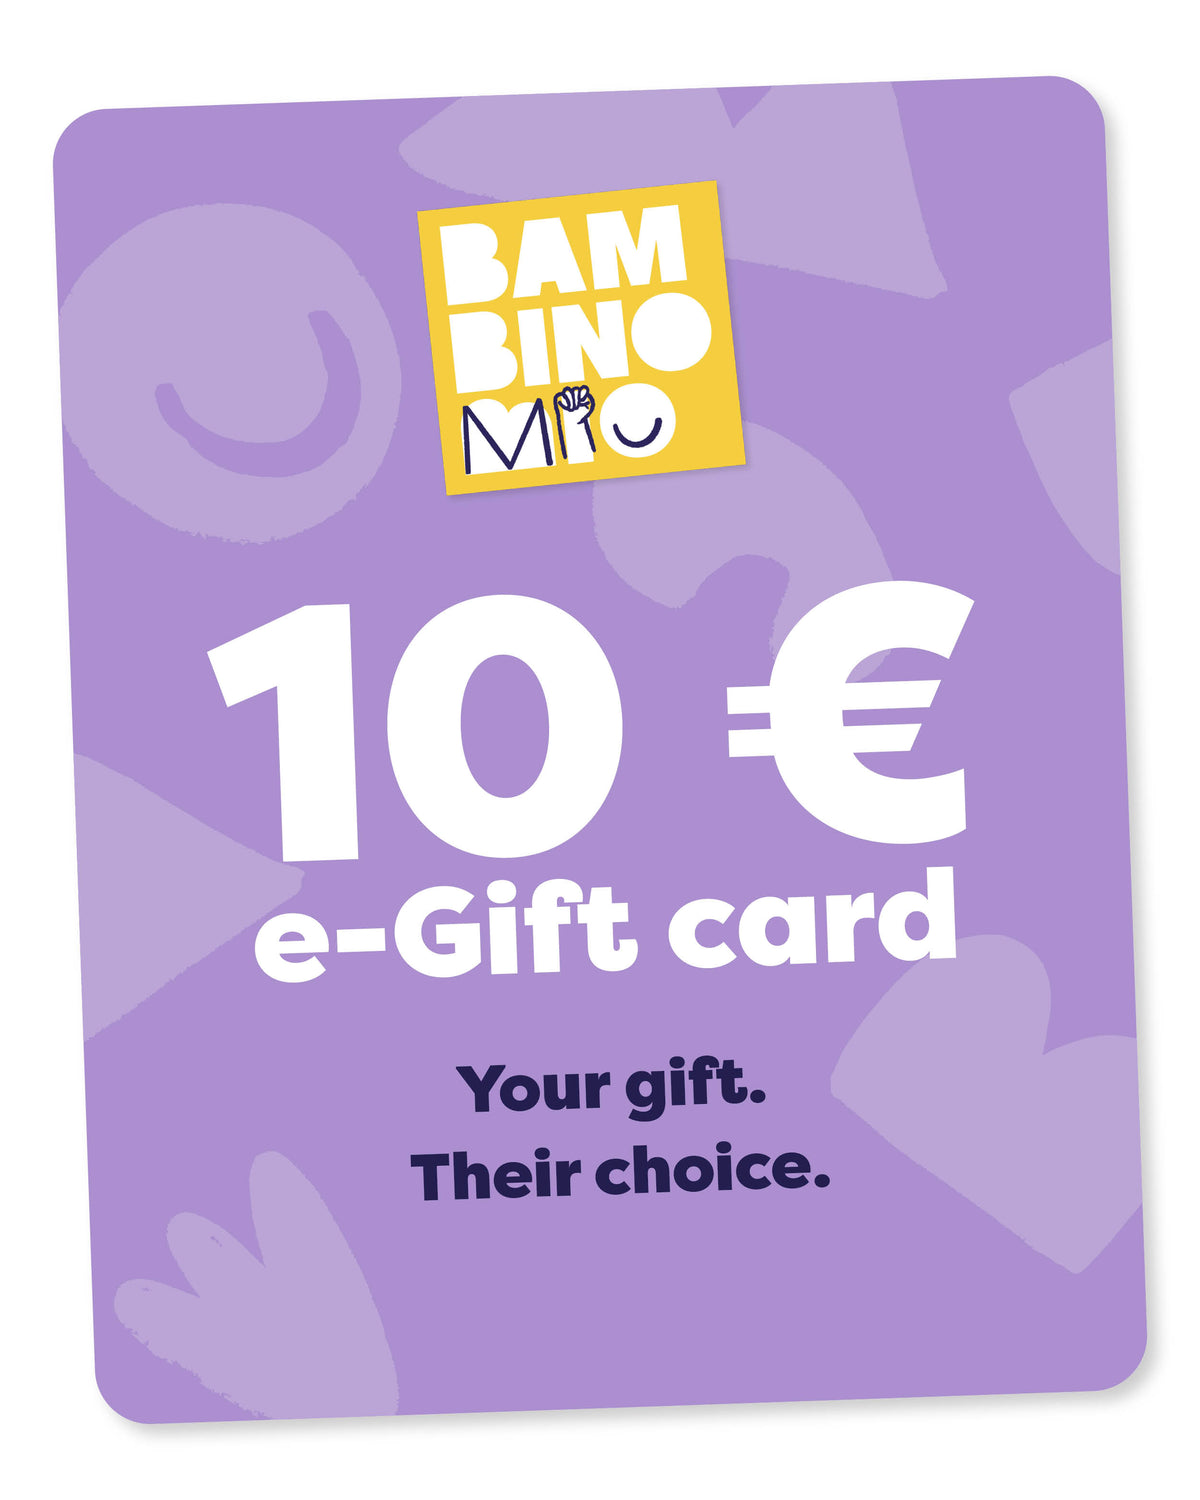 mioboost classic flat nappy insert  BAMBINO MIO® – Bambino Mio (EU)